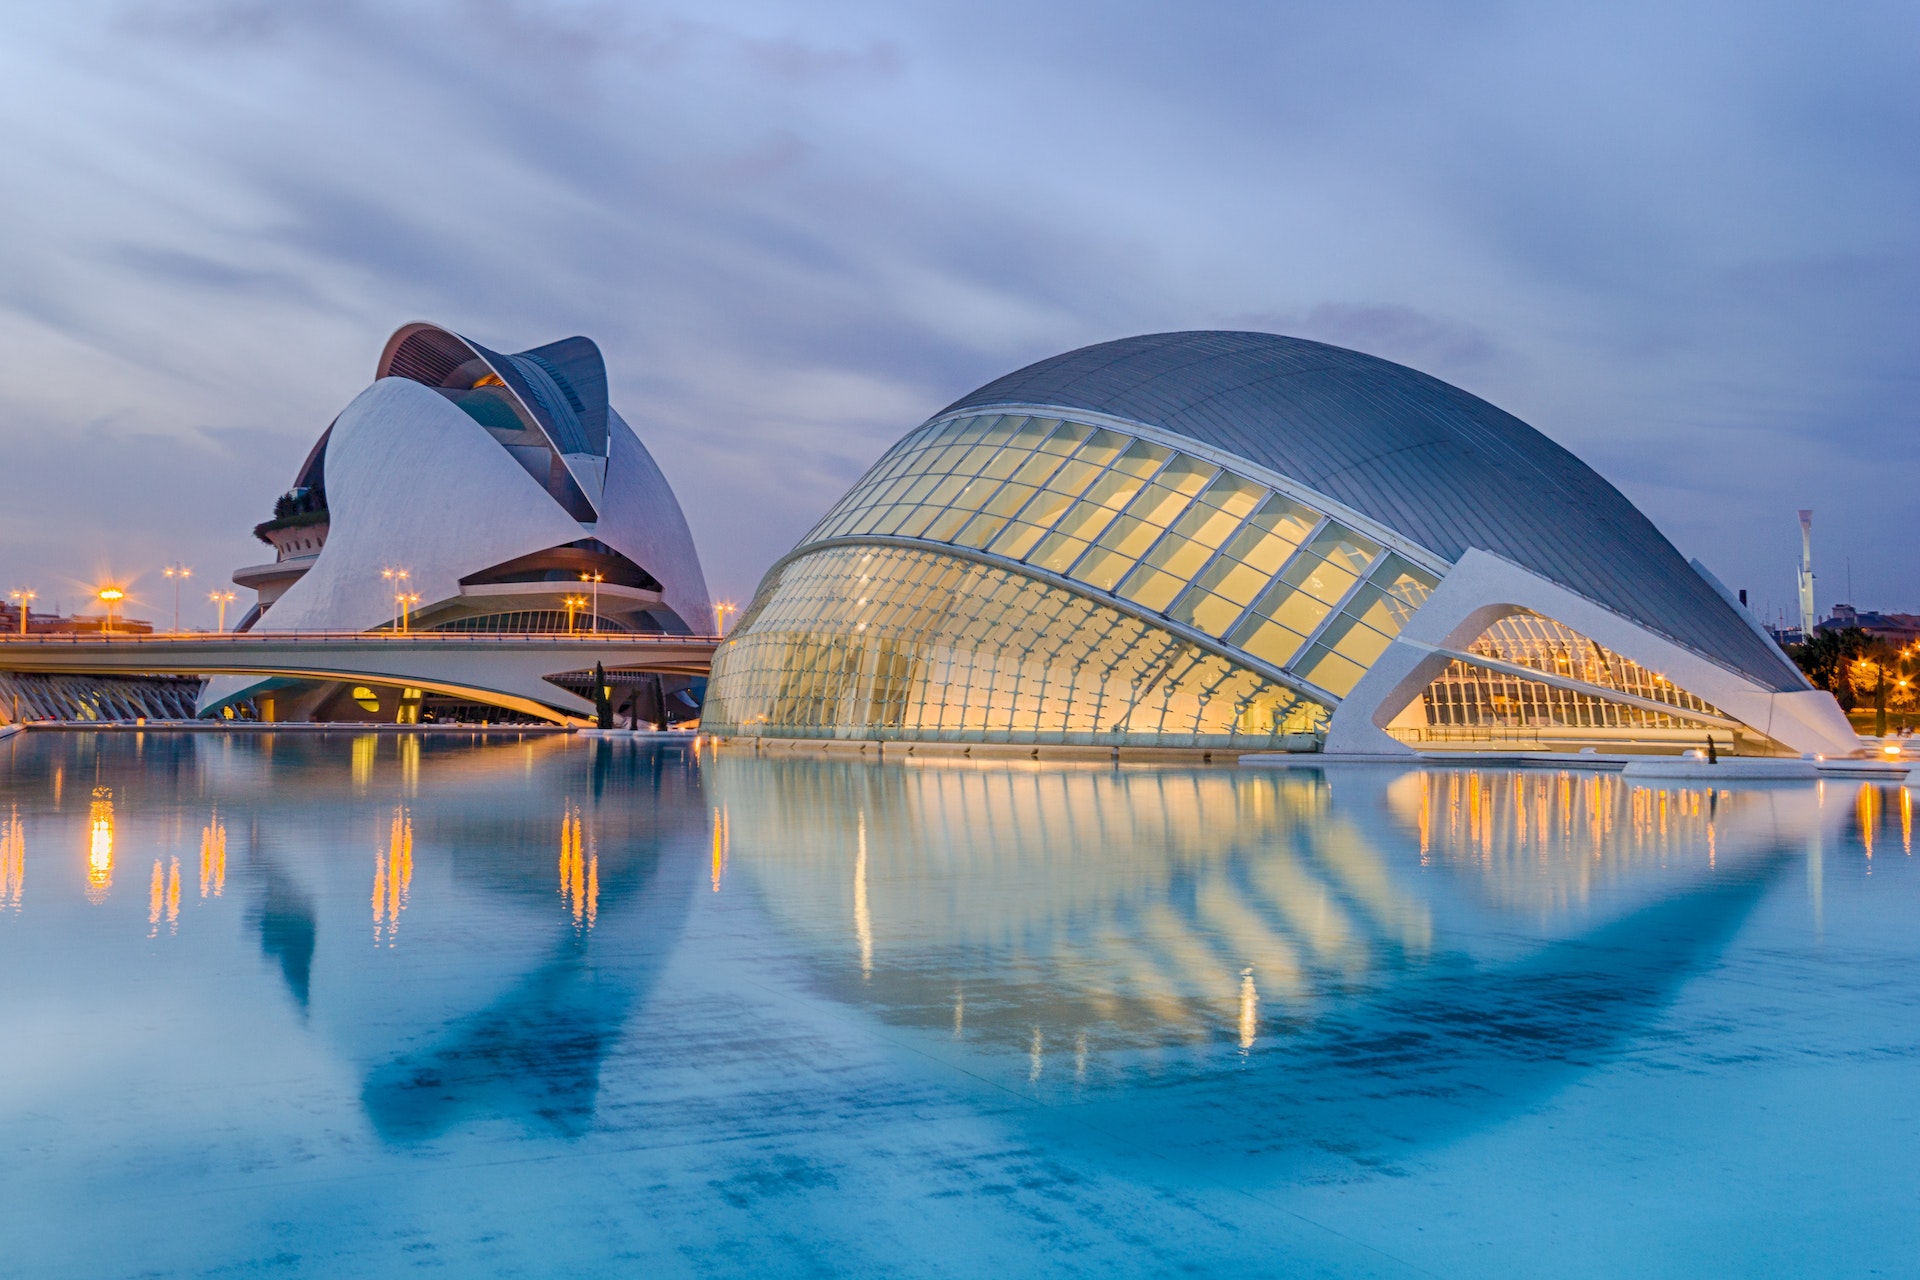 Valencia: Your Next Investment Destination